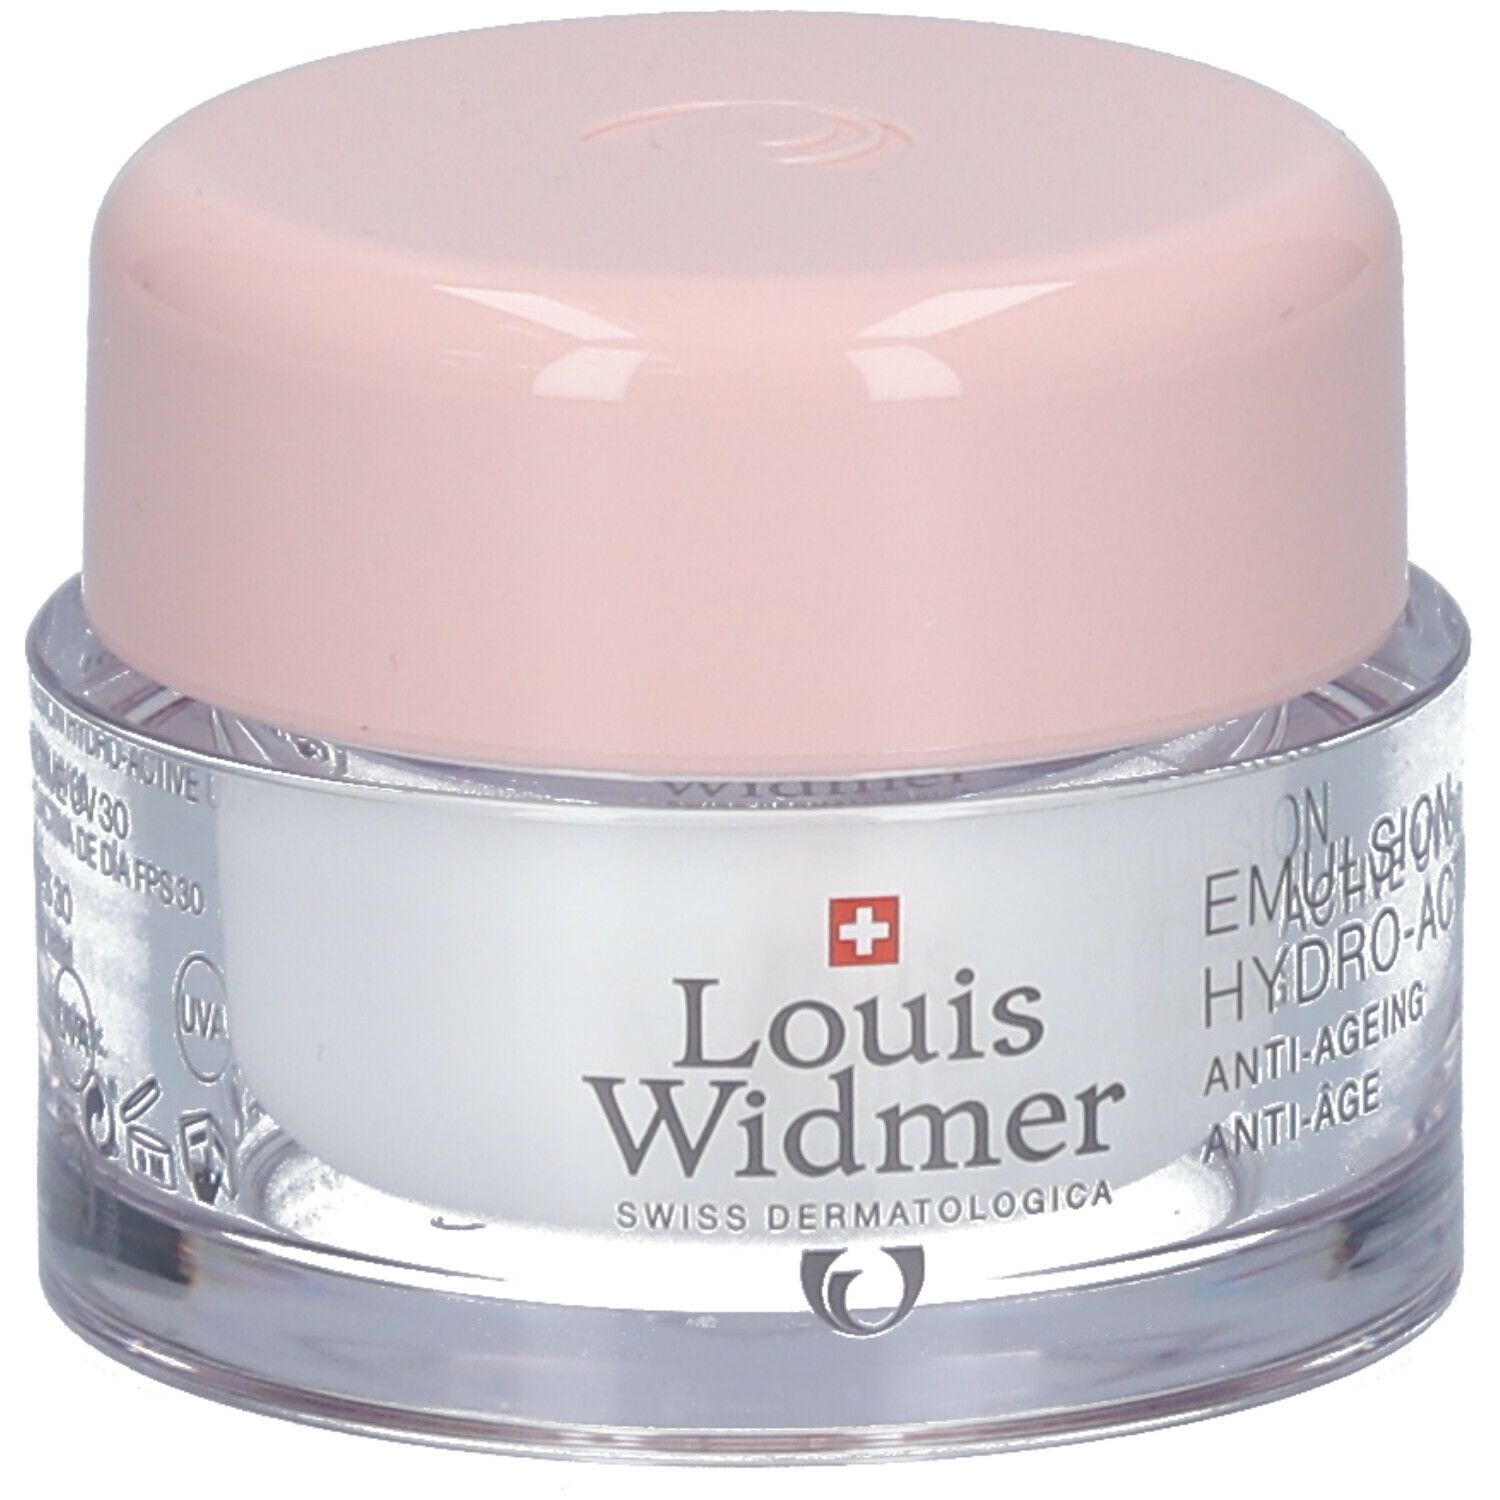 Louis Widmer Moisture Emulsion Hydro-Active UV 30